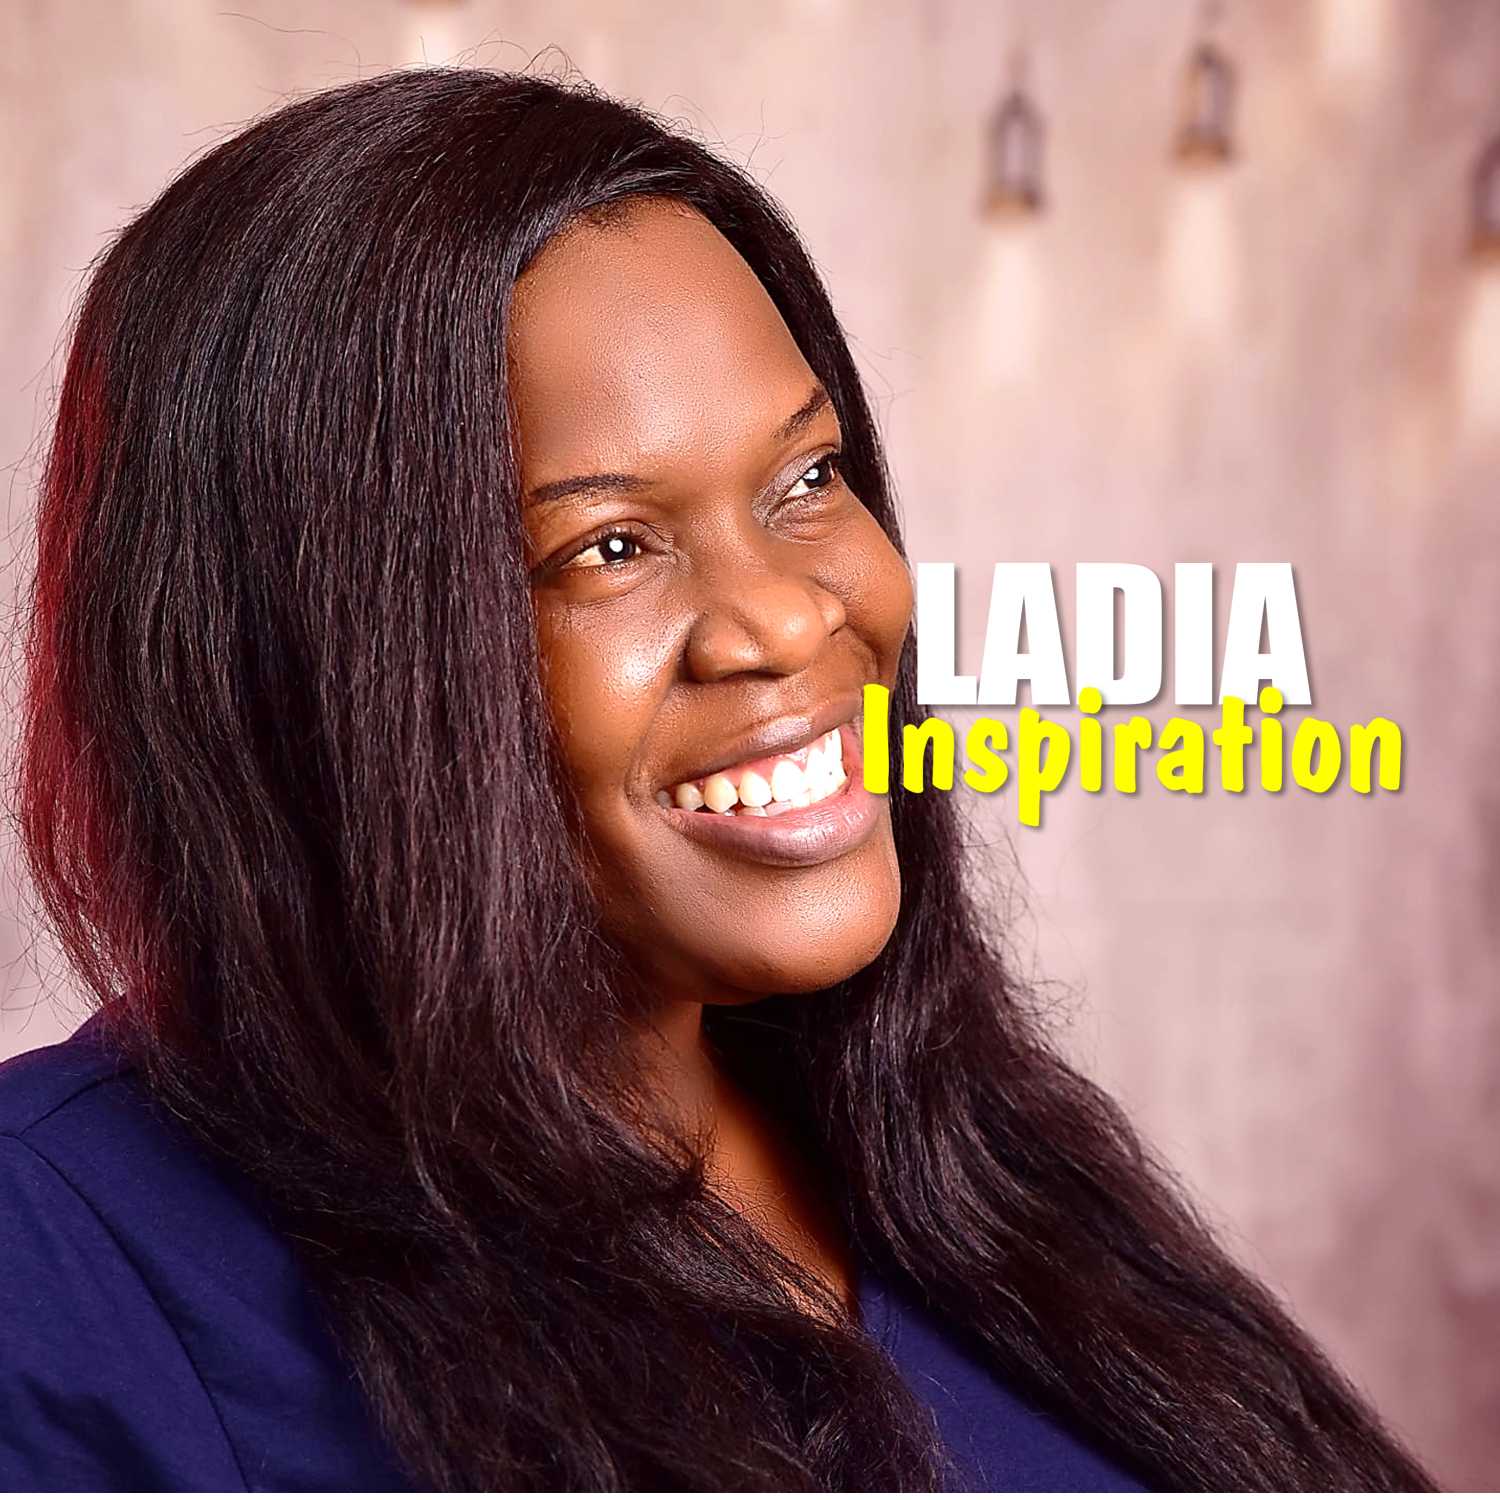 Ladia Inspiration